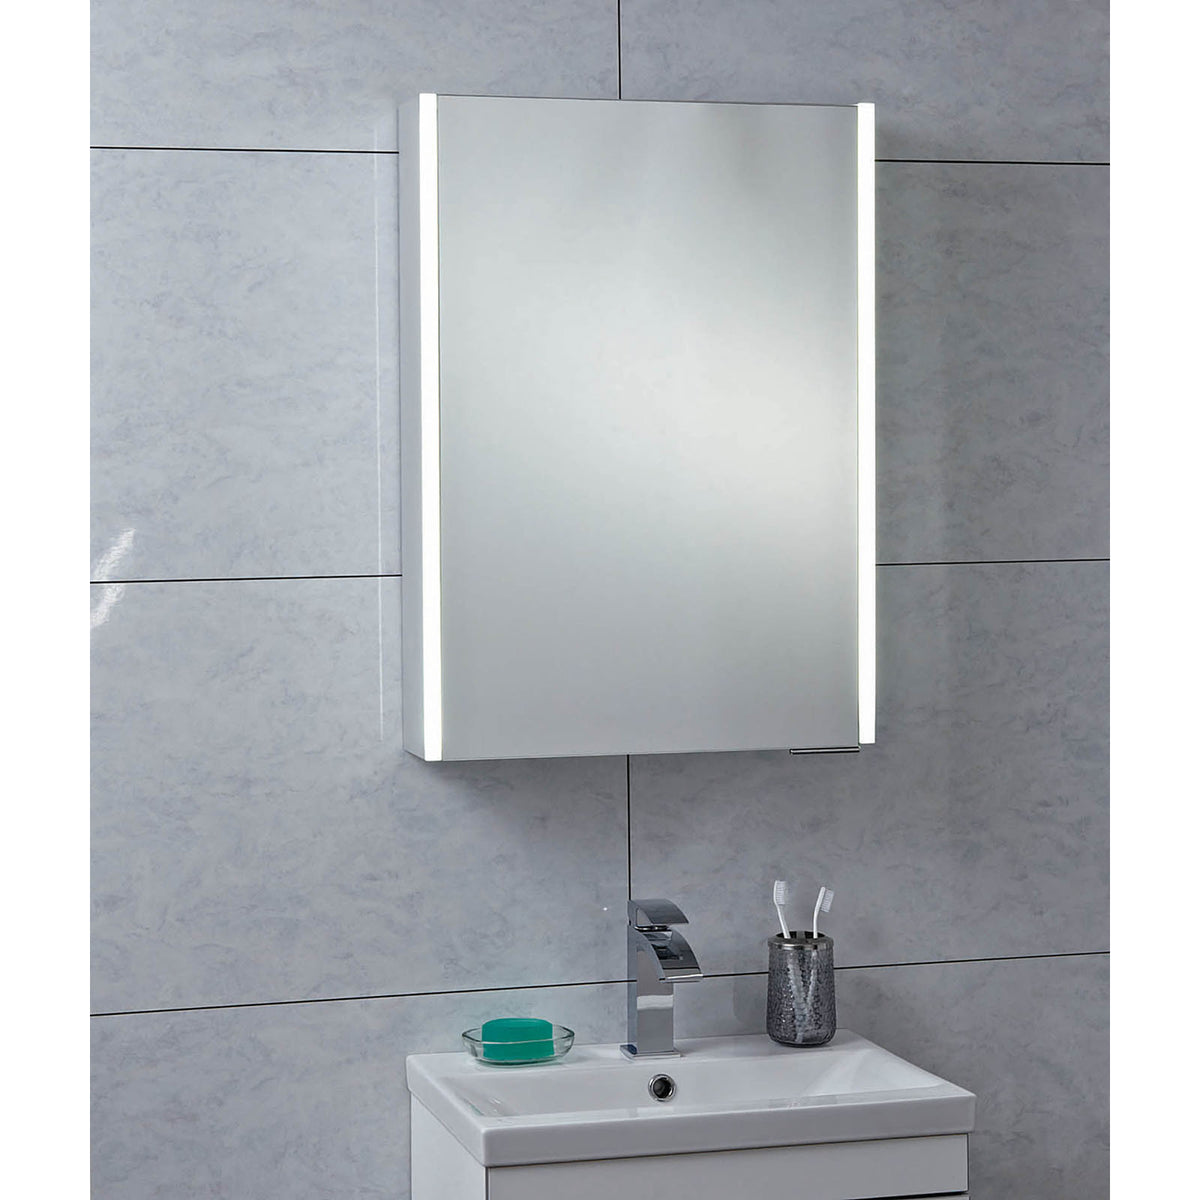 Phoenix Saturn Single Door Led Mirror Cabinet Mi037 Bathroom